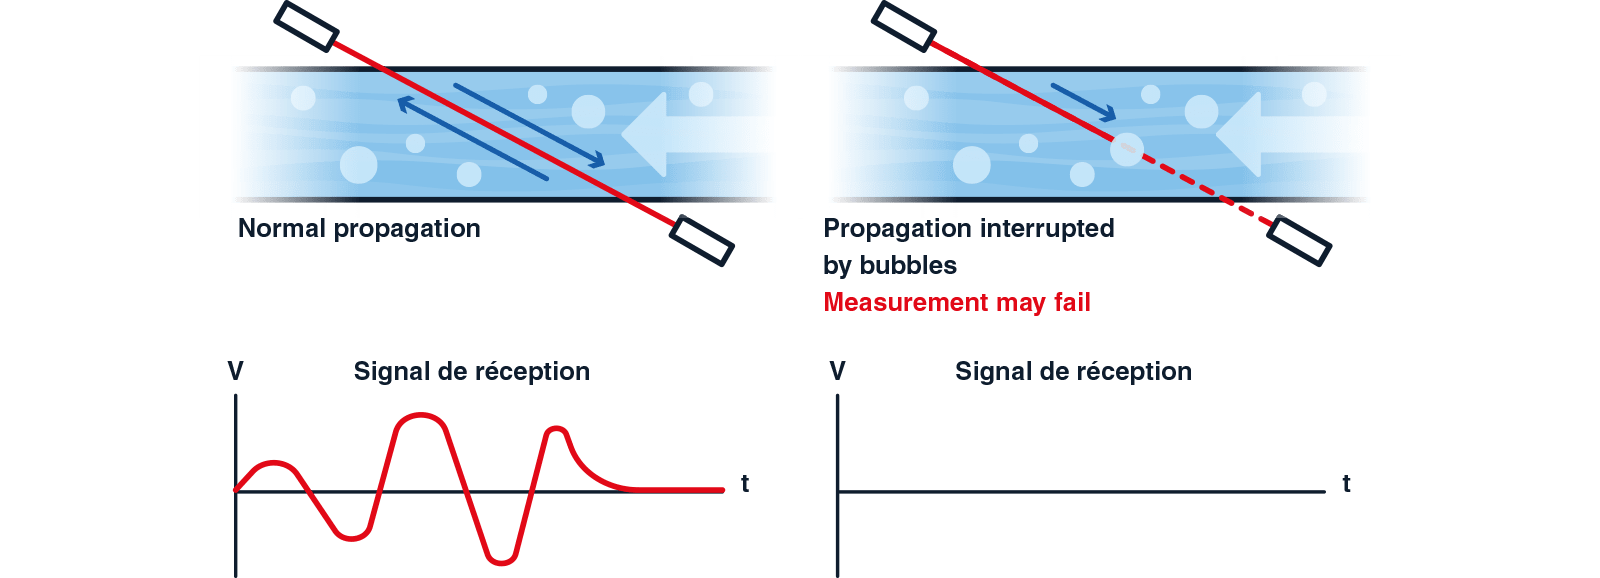 propagation-normal-and-interrupted-schema-en